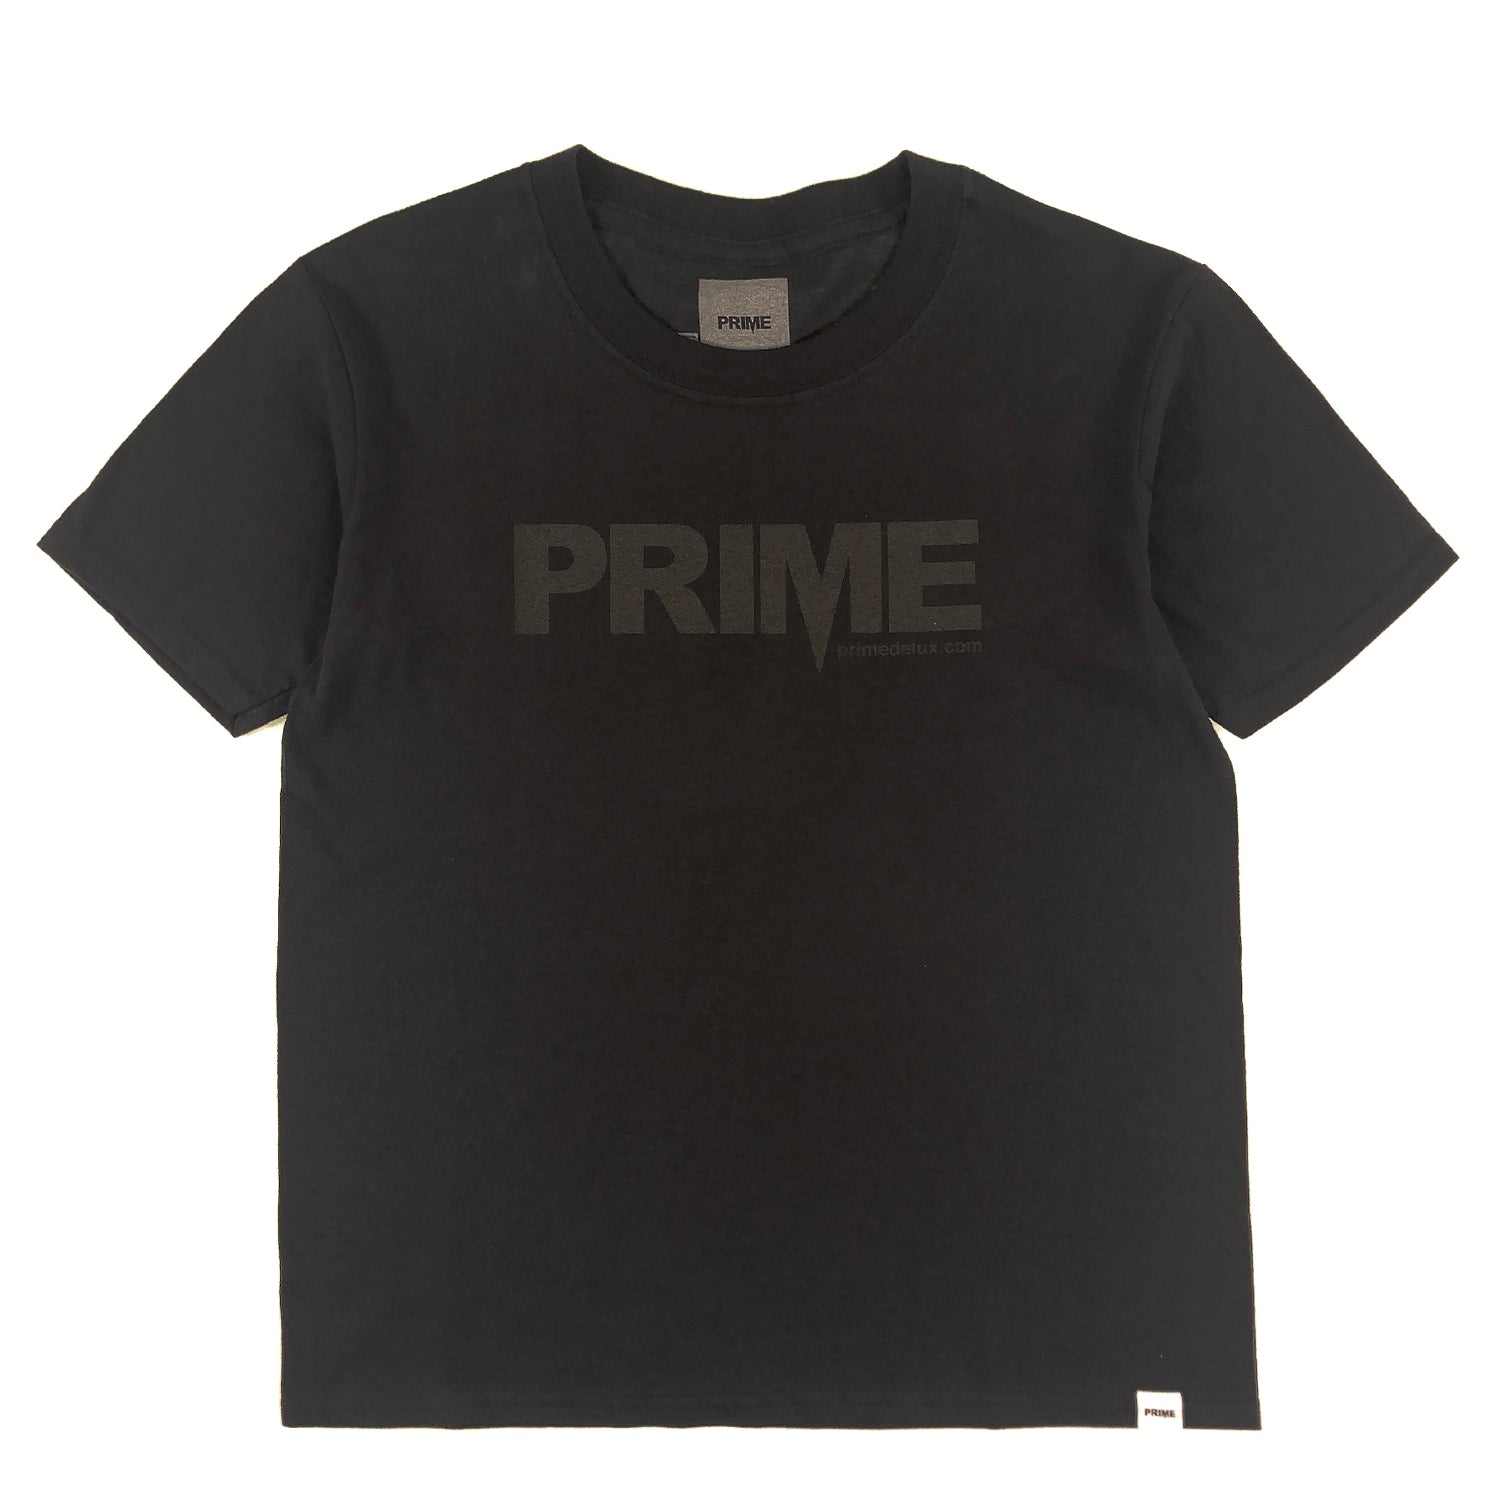 PRIME DELUX YOUTHS OG PREMIUM SHORT SLEEVE T-SHIRT - BLACK / BLACK - Prime Delux Store